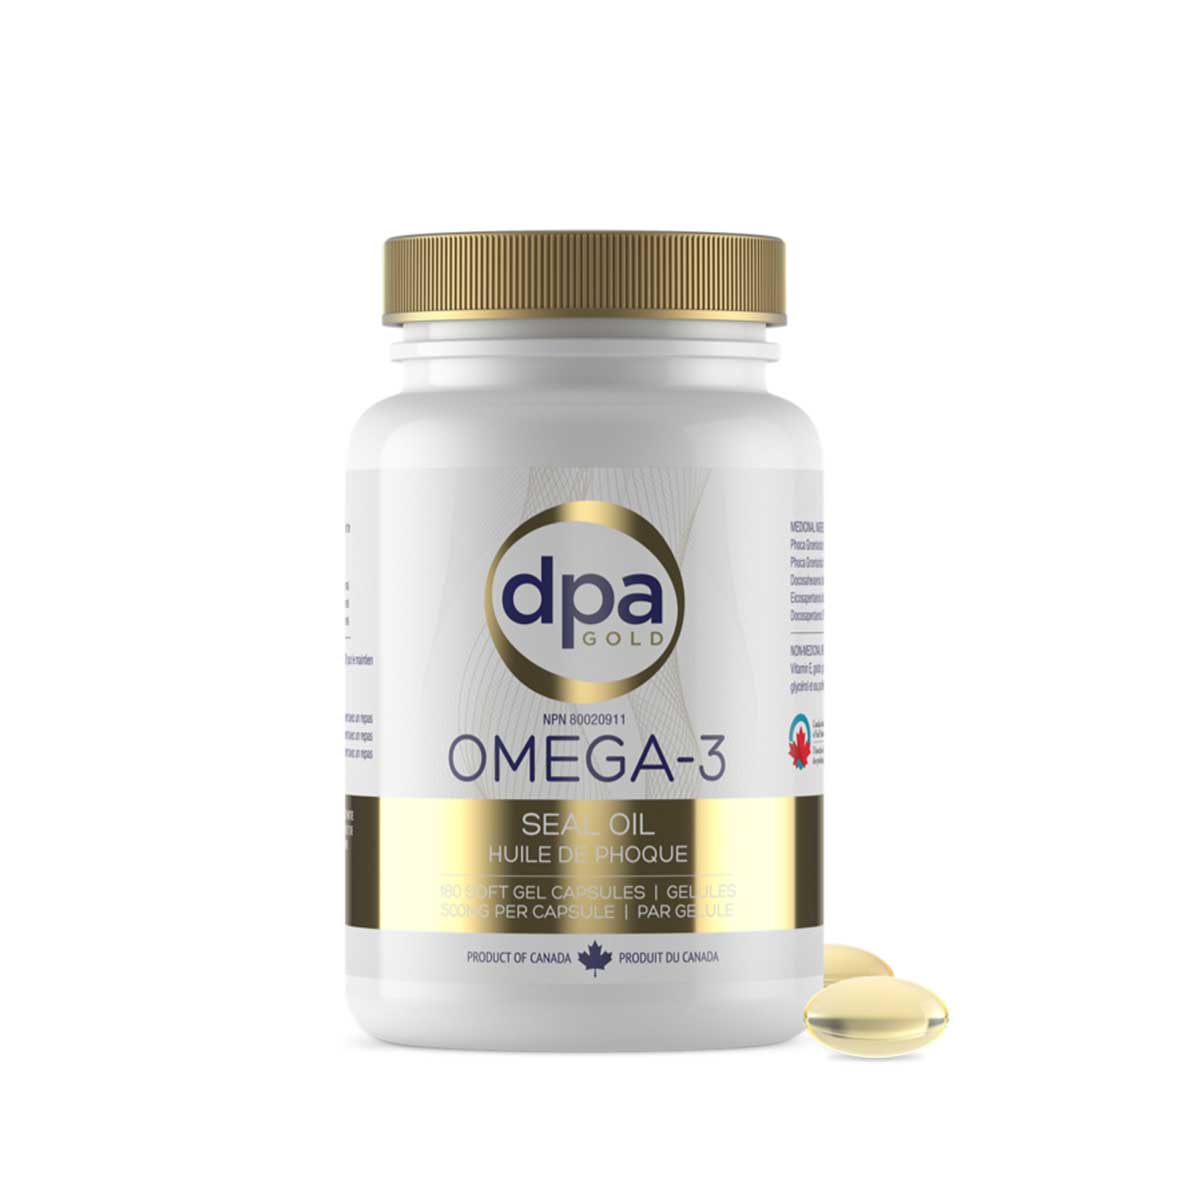 Omega 3 Fish Oil & Vegan Omega-3 Supplements